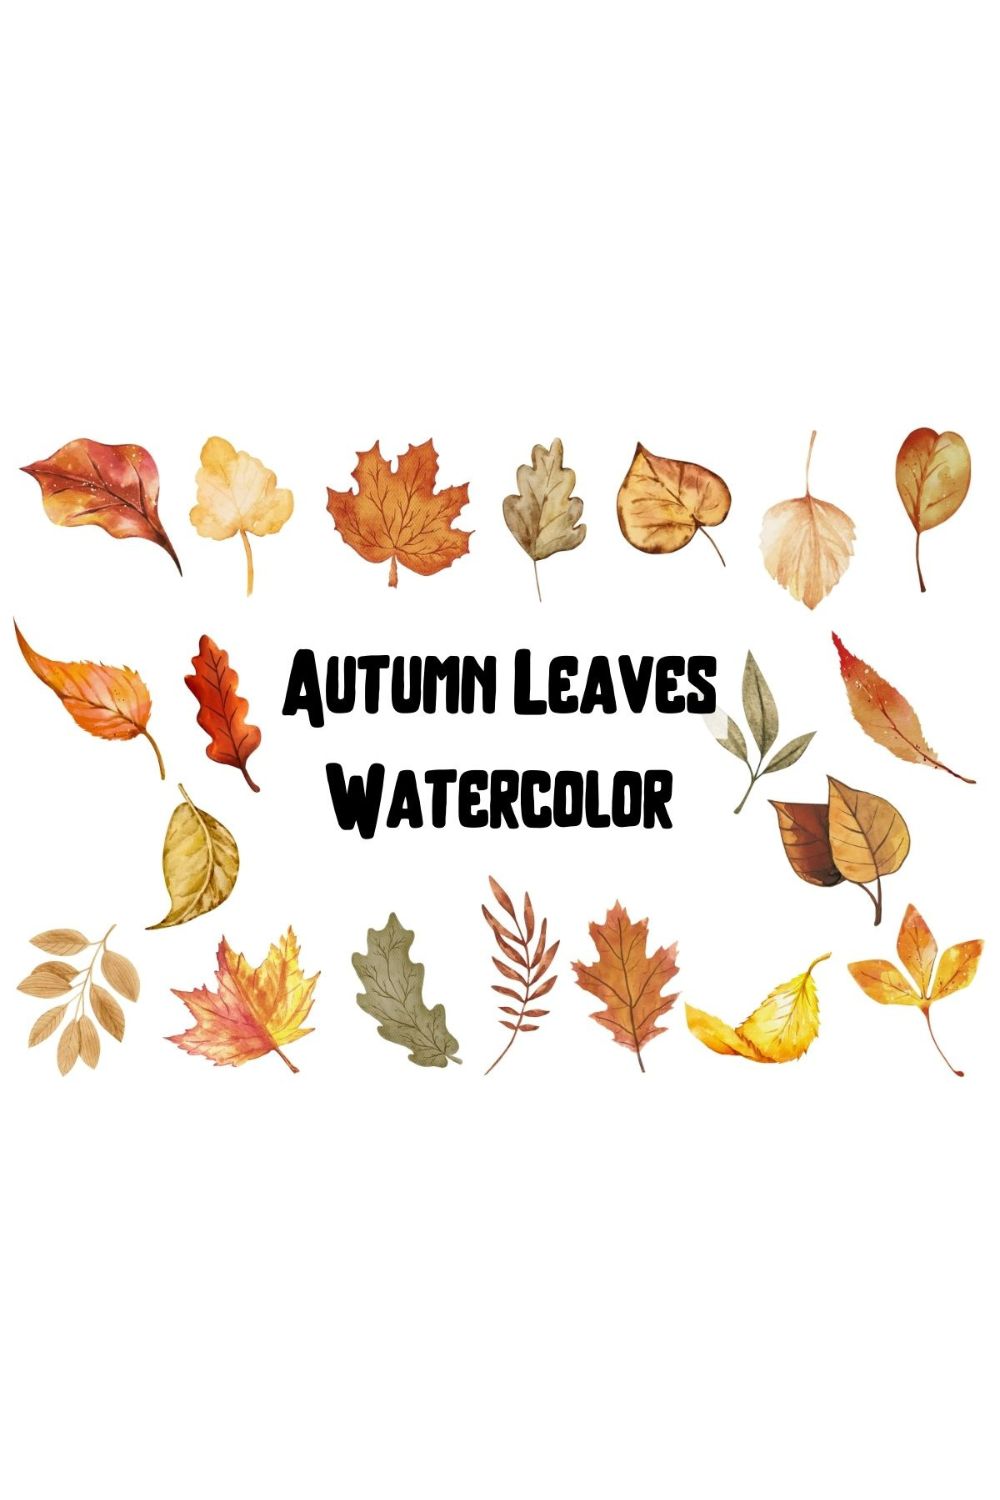 Watercolor Autumn Leaves Clipart pinterest preview image.